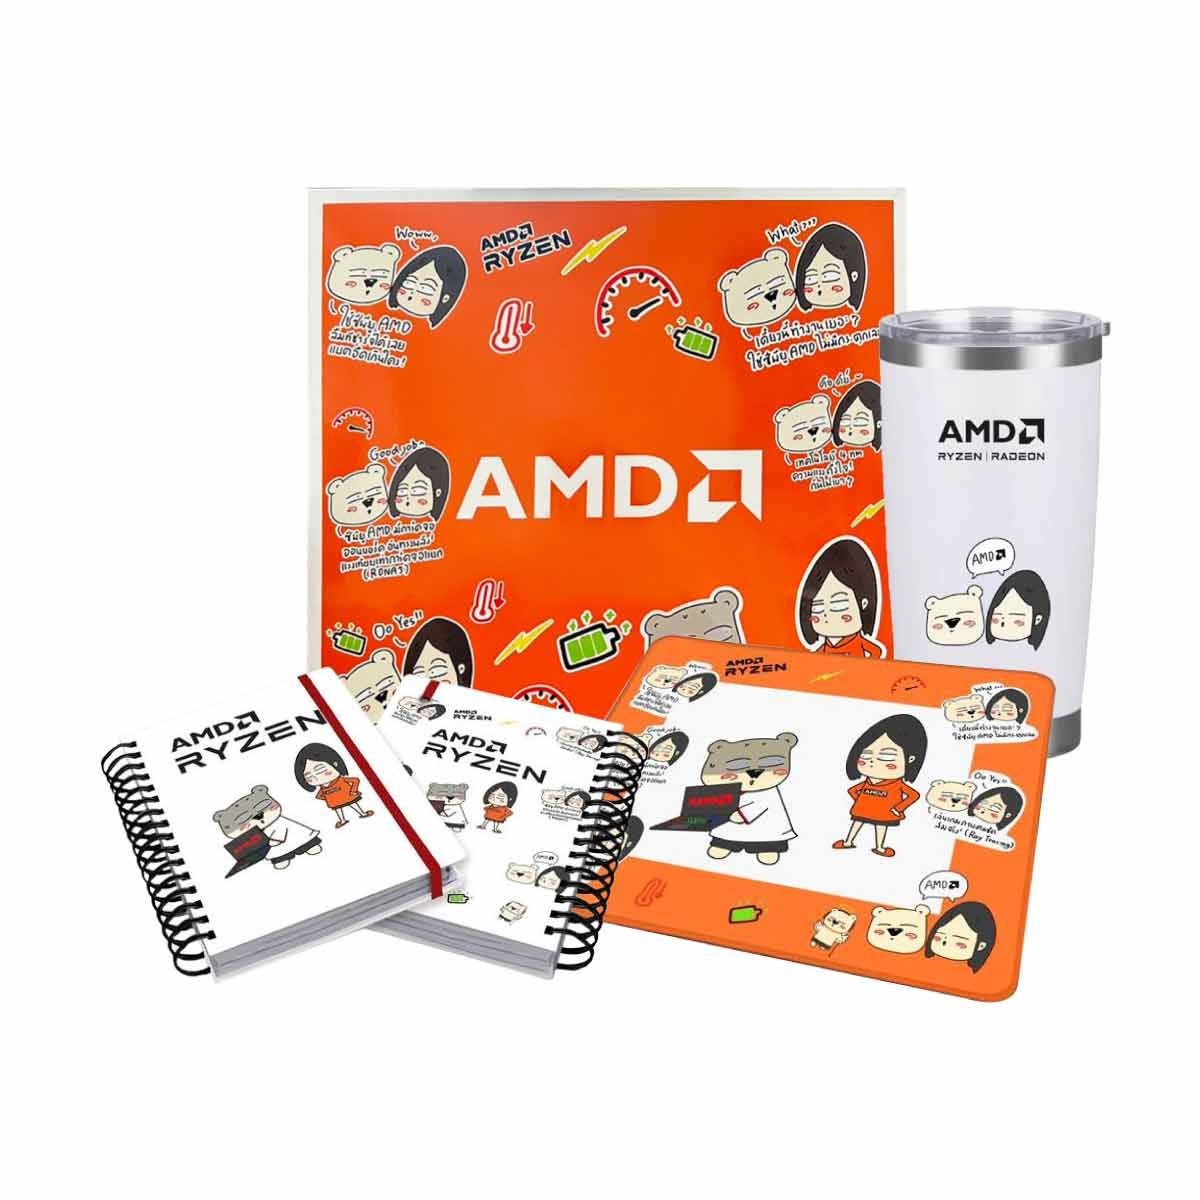 AMD BOXSET คนอะไรเป็นแฟนหมี (แก้ว+แผ่นรองเม้าส์+สมุดโน้ต)